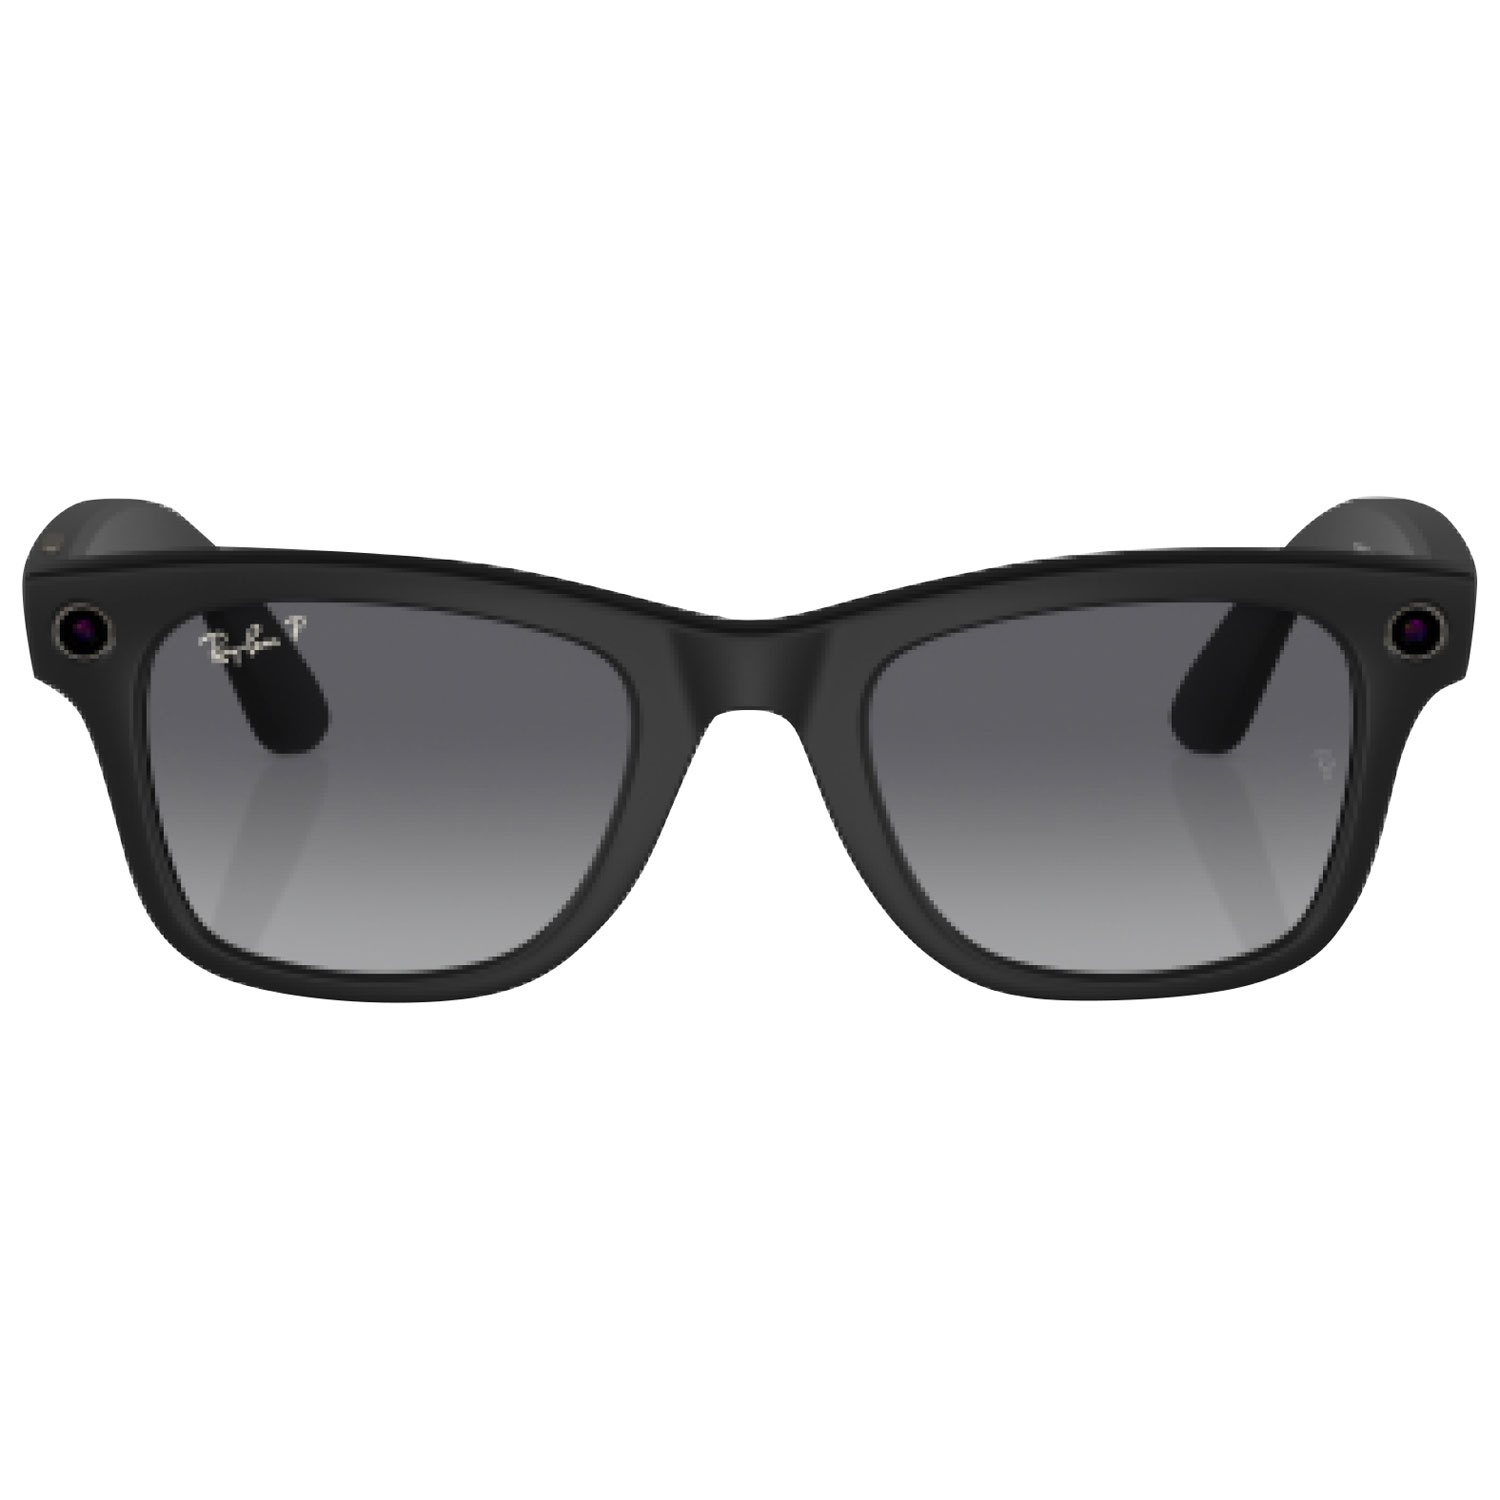 Ray-Ban | Meta Wayfarer Smart Glasses with Photo, Video & Audio - Matte Black/Polarized Gradient Graphite - Large